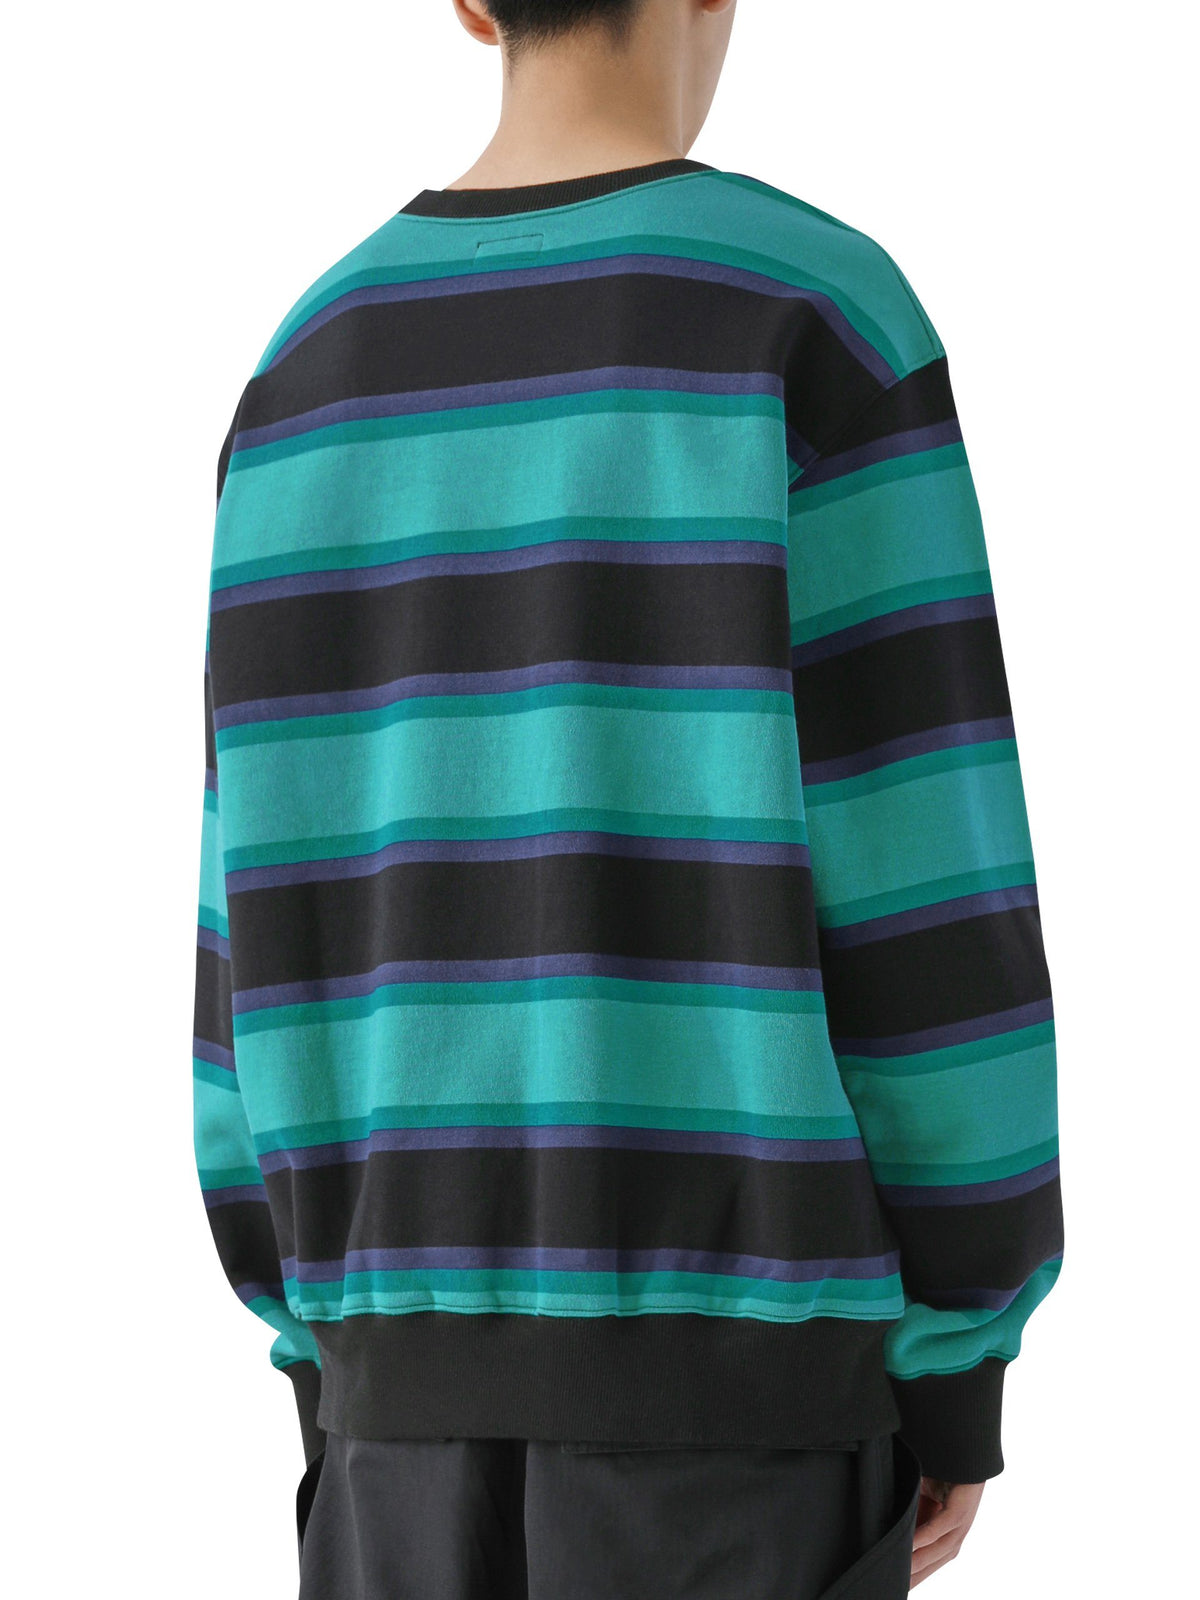 Striped Crewneck Sweatshirts 